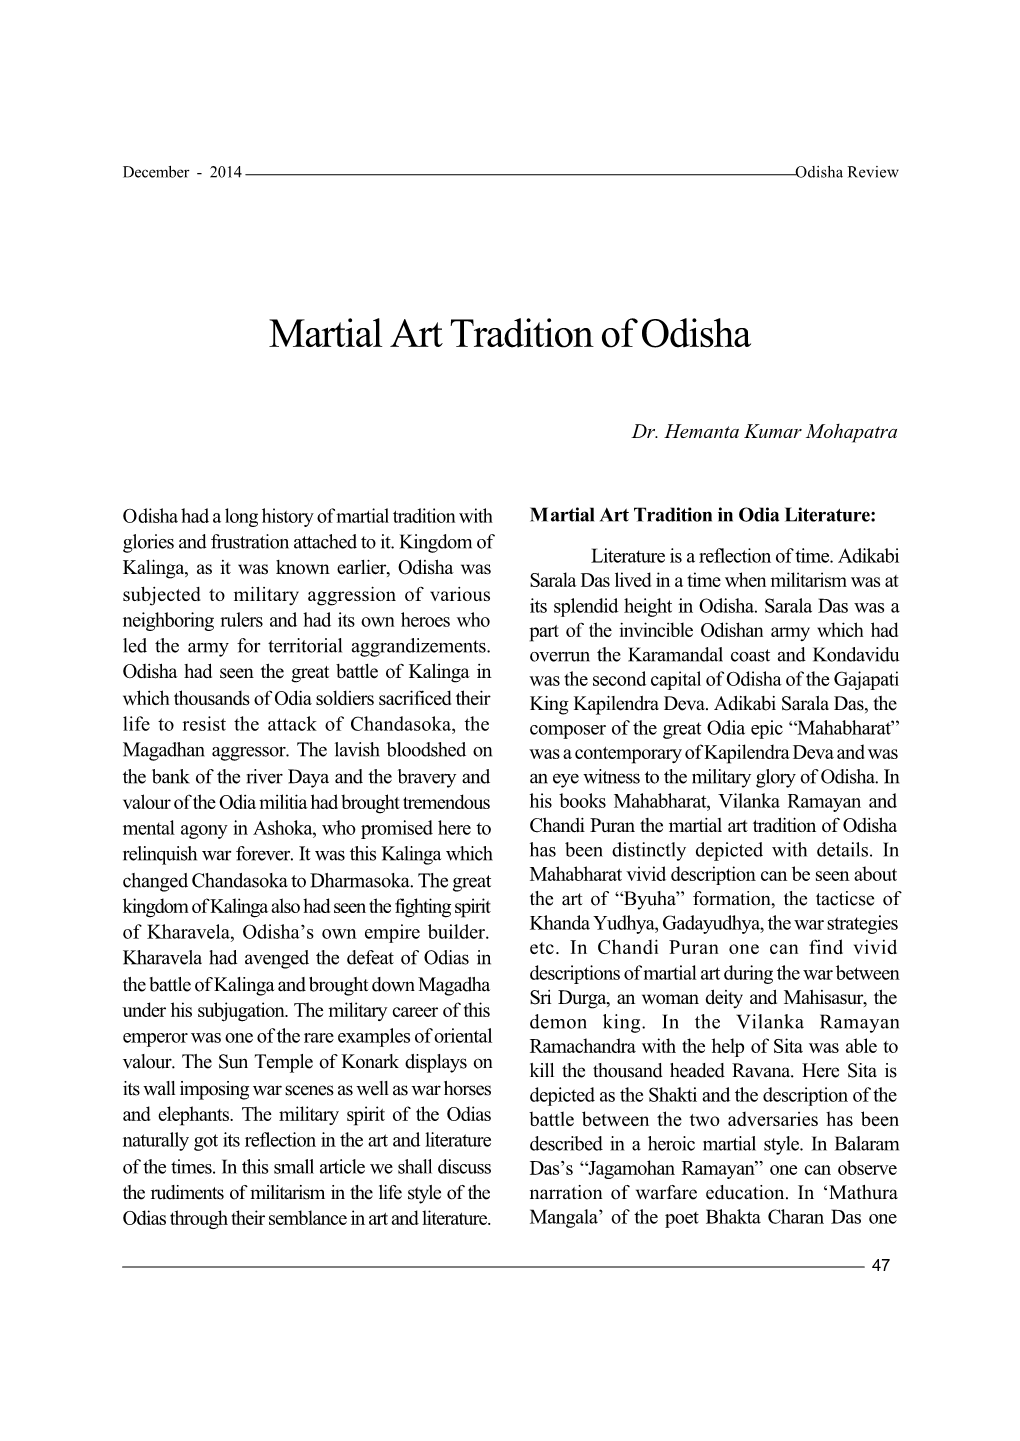 Martial Art Tradition of Odisha